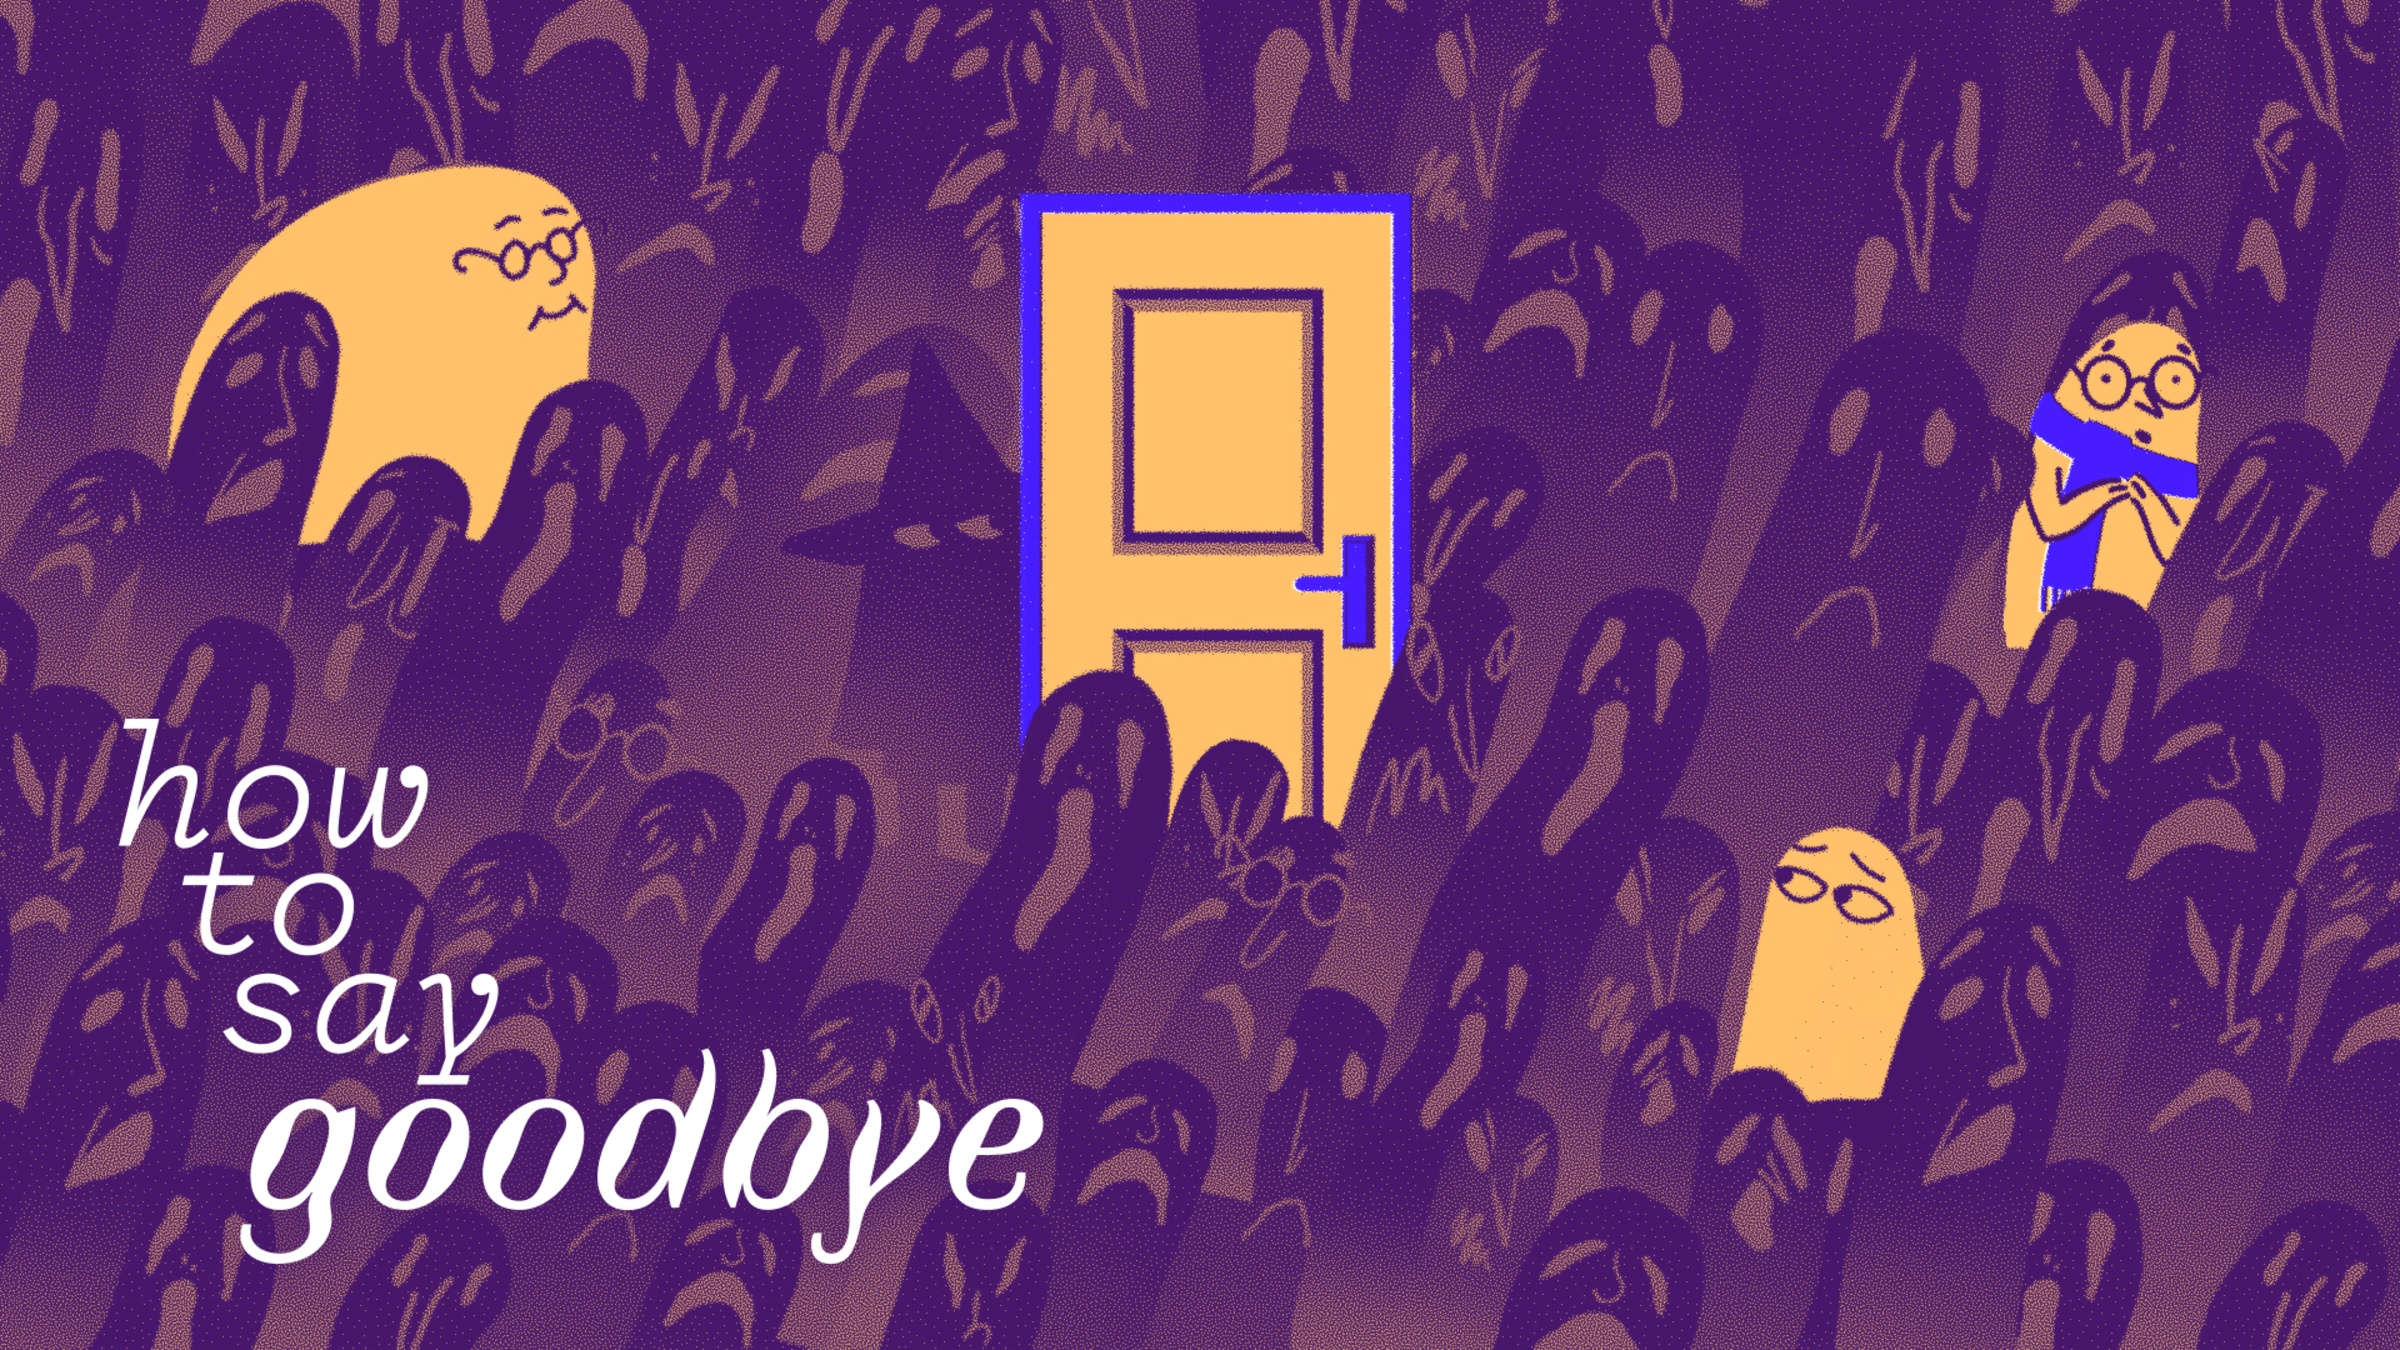 saying goodbye images